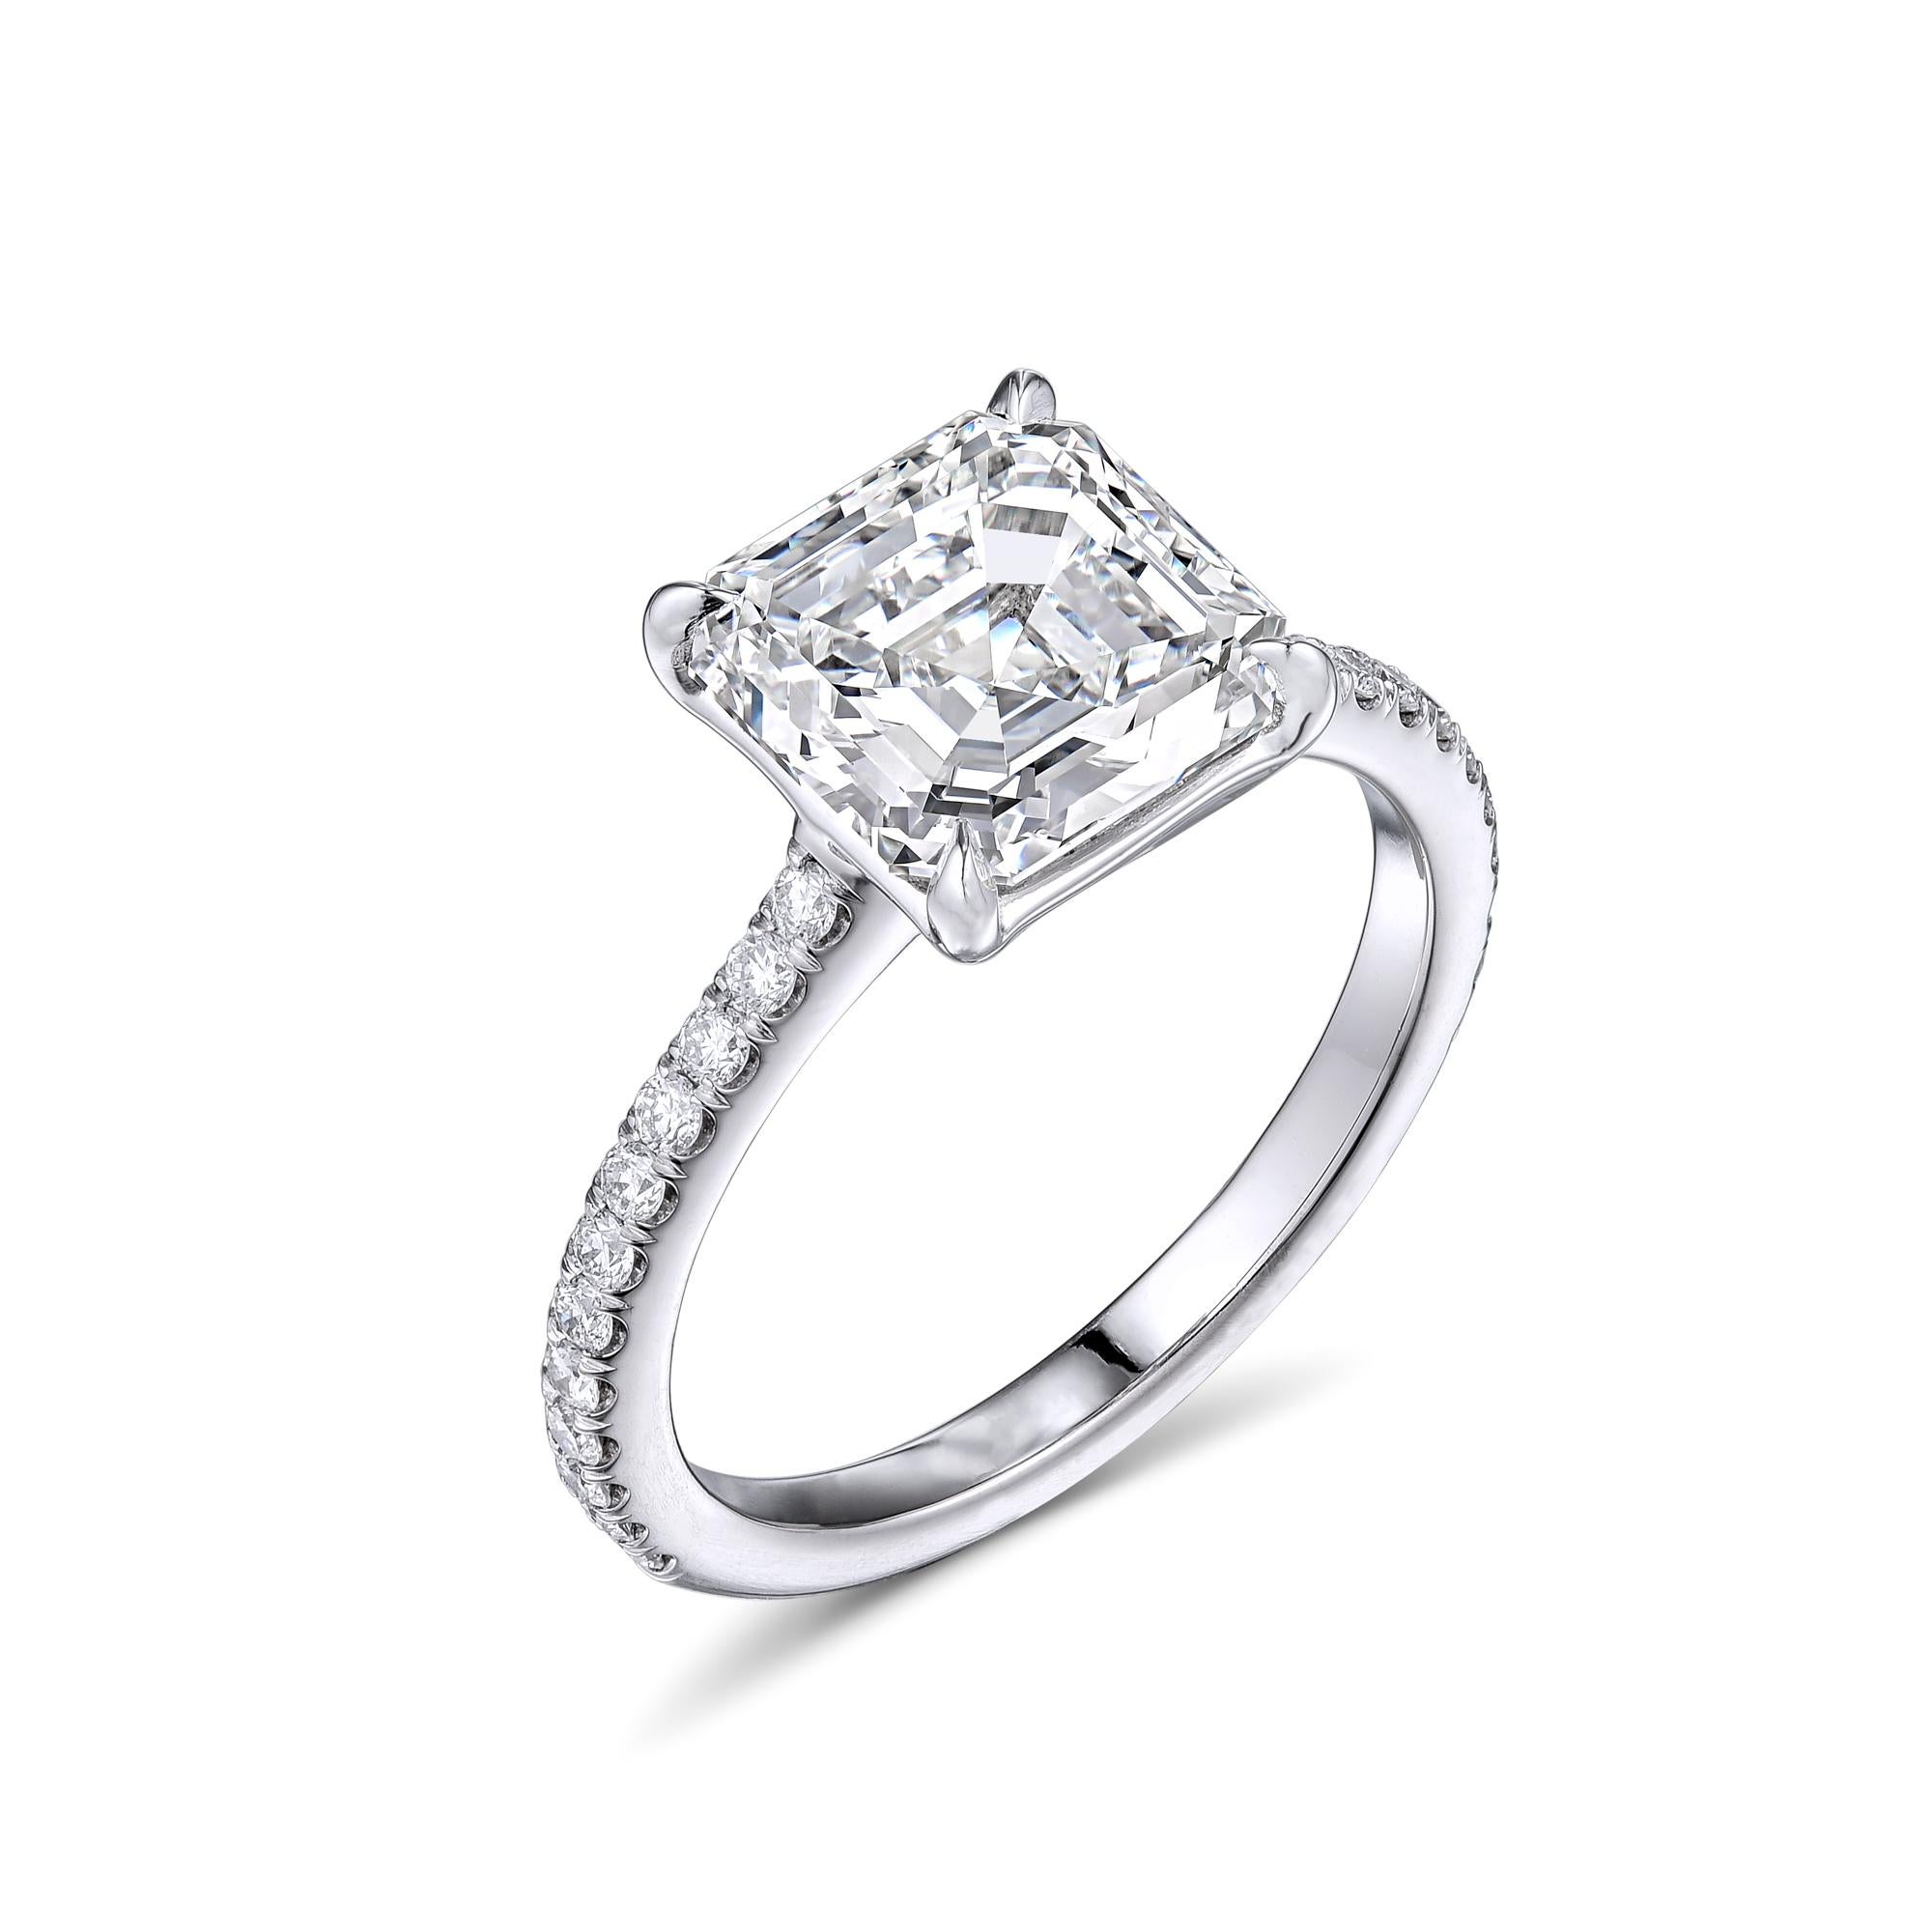 Diamond Platinum ring with GIA certificate, no. 2165724127. Details are: Center stone: 3.02 / H VS1 Asscher/Square emerald cut naturally mined diamond, 8.43 x 8.39 x 5.15 mm. Side stones: .40 ct / G-H VS-VS2  Brilliant round diamonds. Total carat